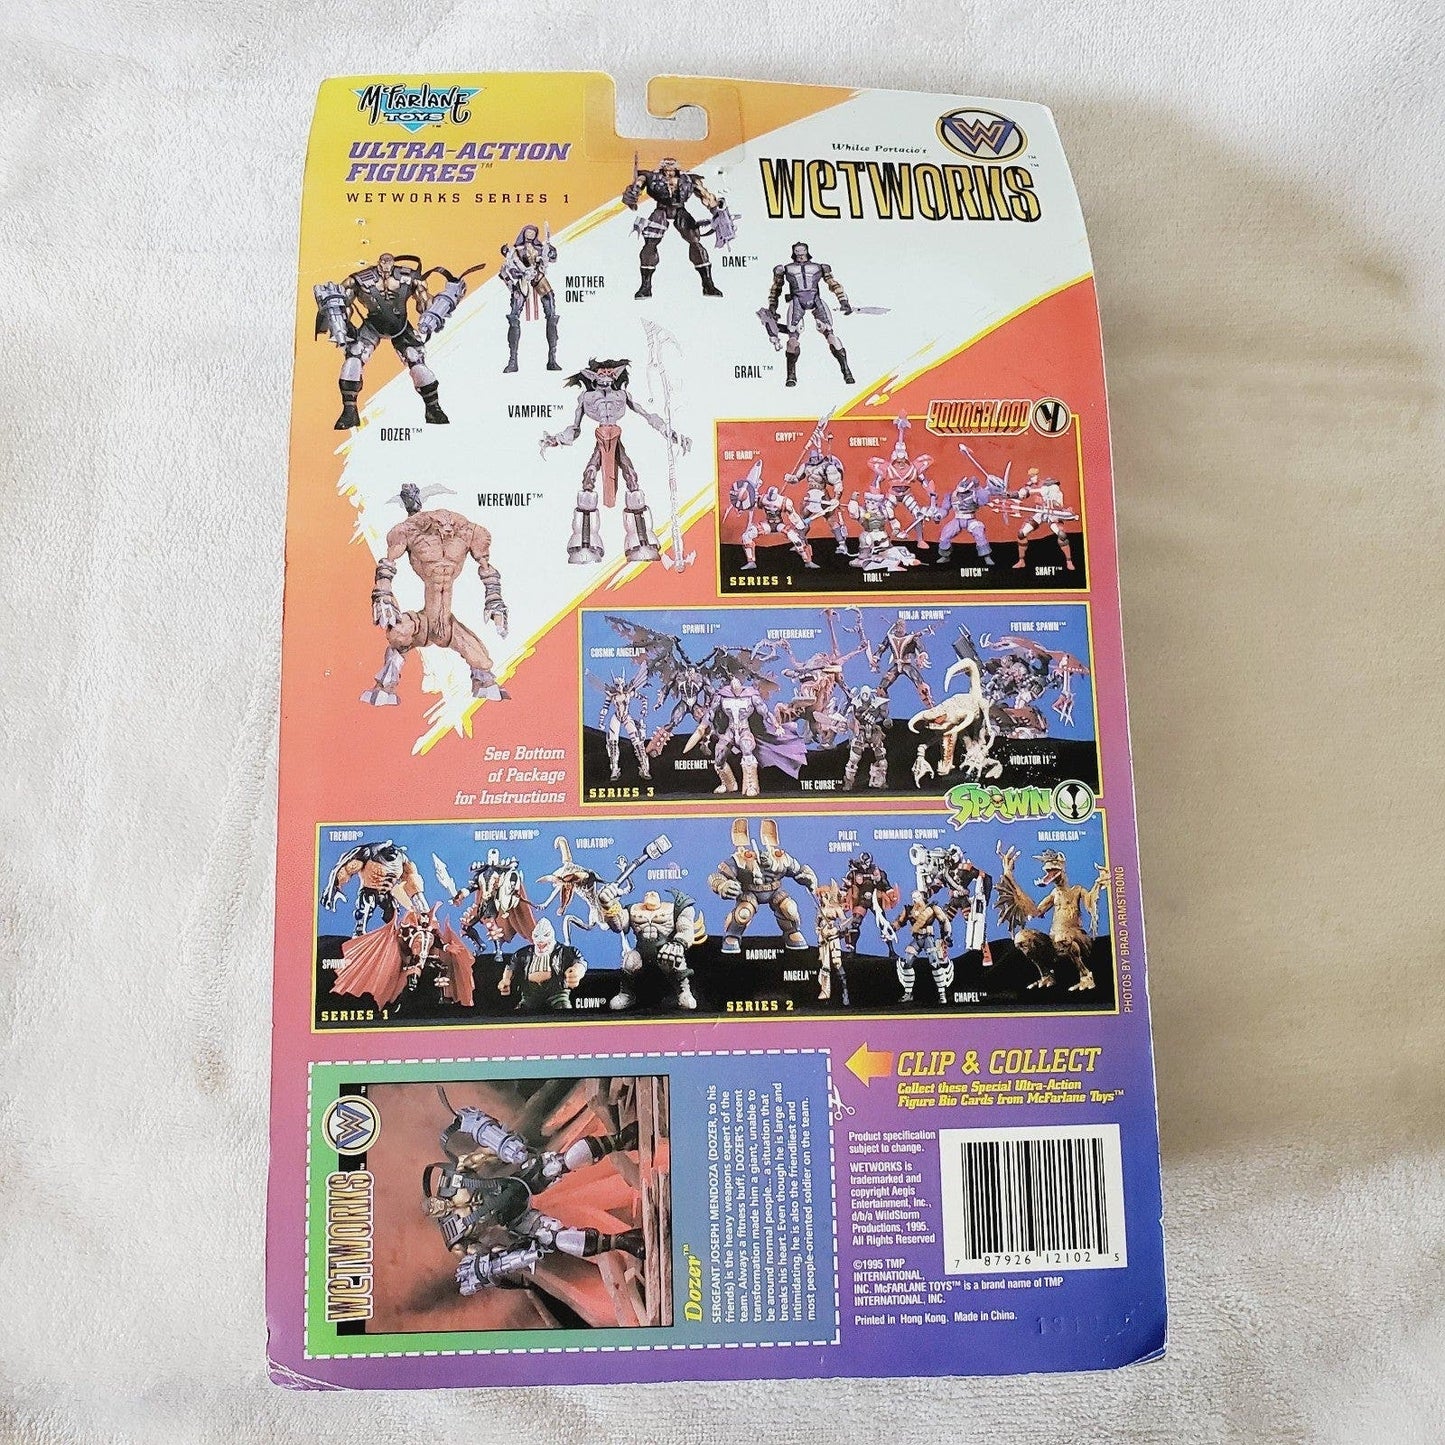 '95 Todd McFarlane's Toys Spawn Series 3 Cosmic Angela Action Figure- NIB(Unopened)